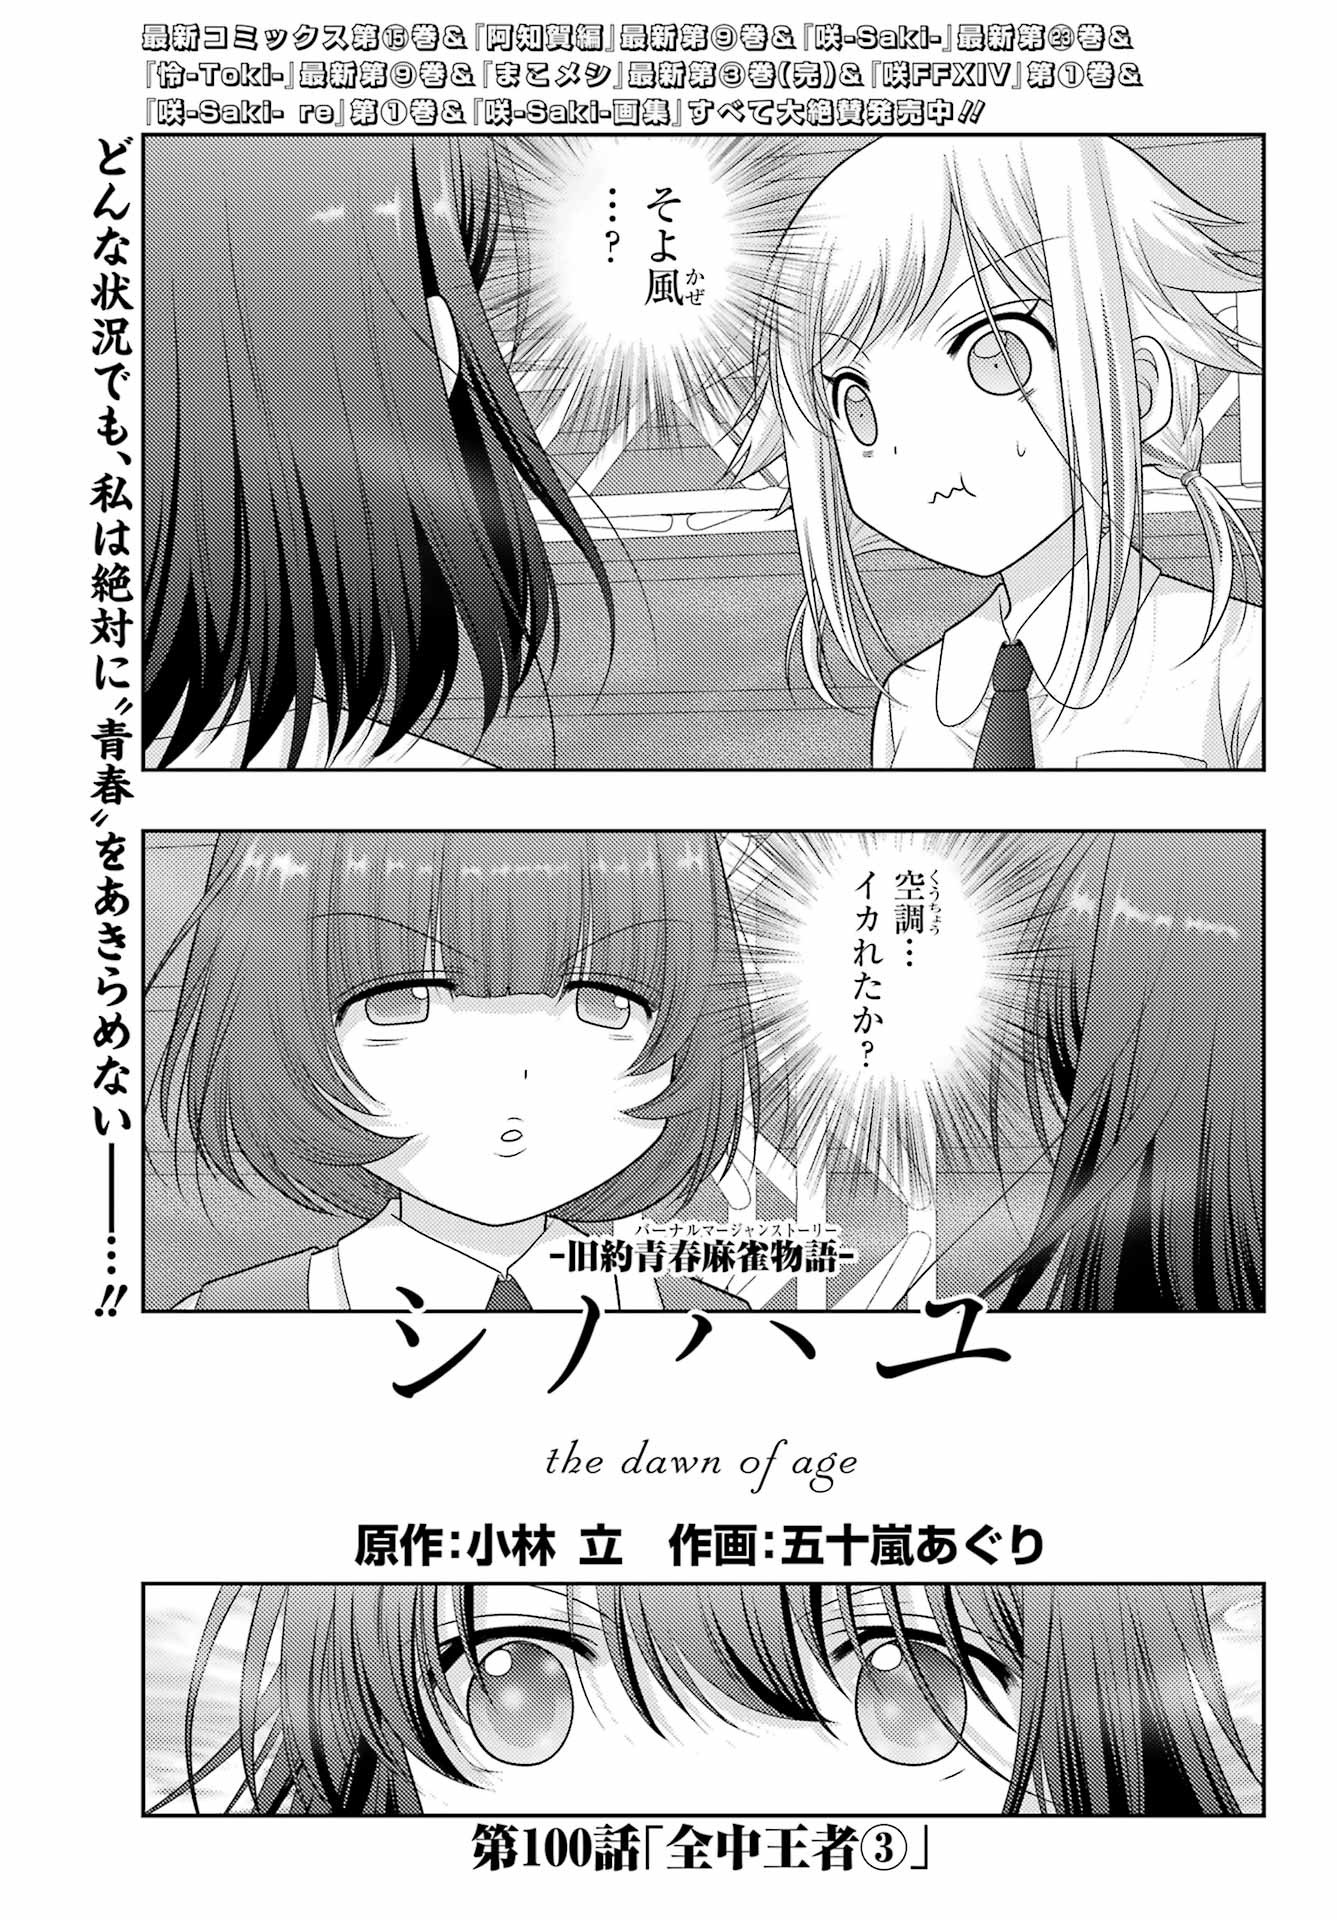 Shinohayu - The Dawn of Age Manga - Chapter 100 - Page 1